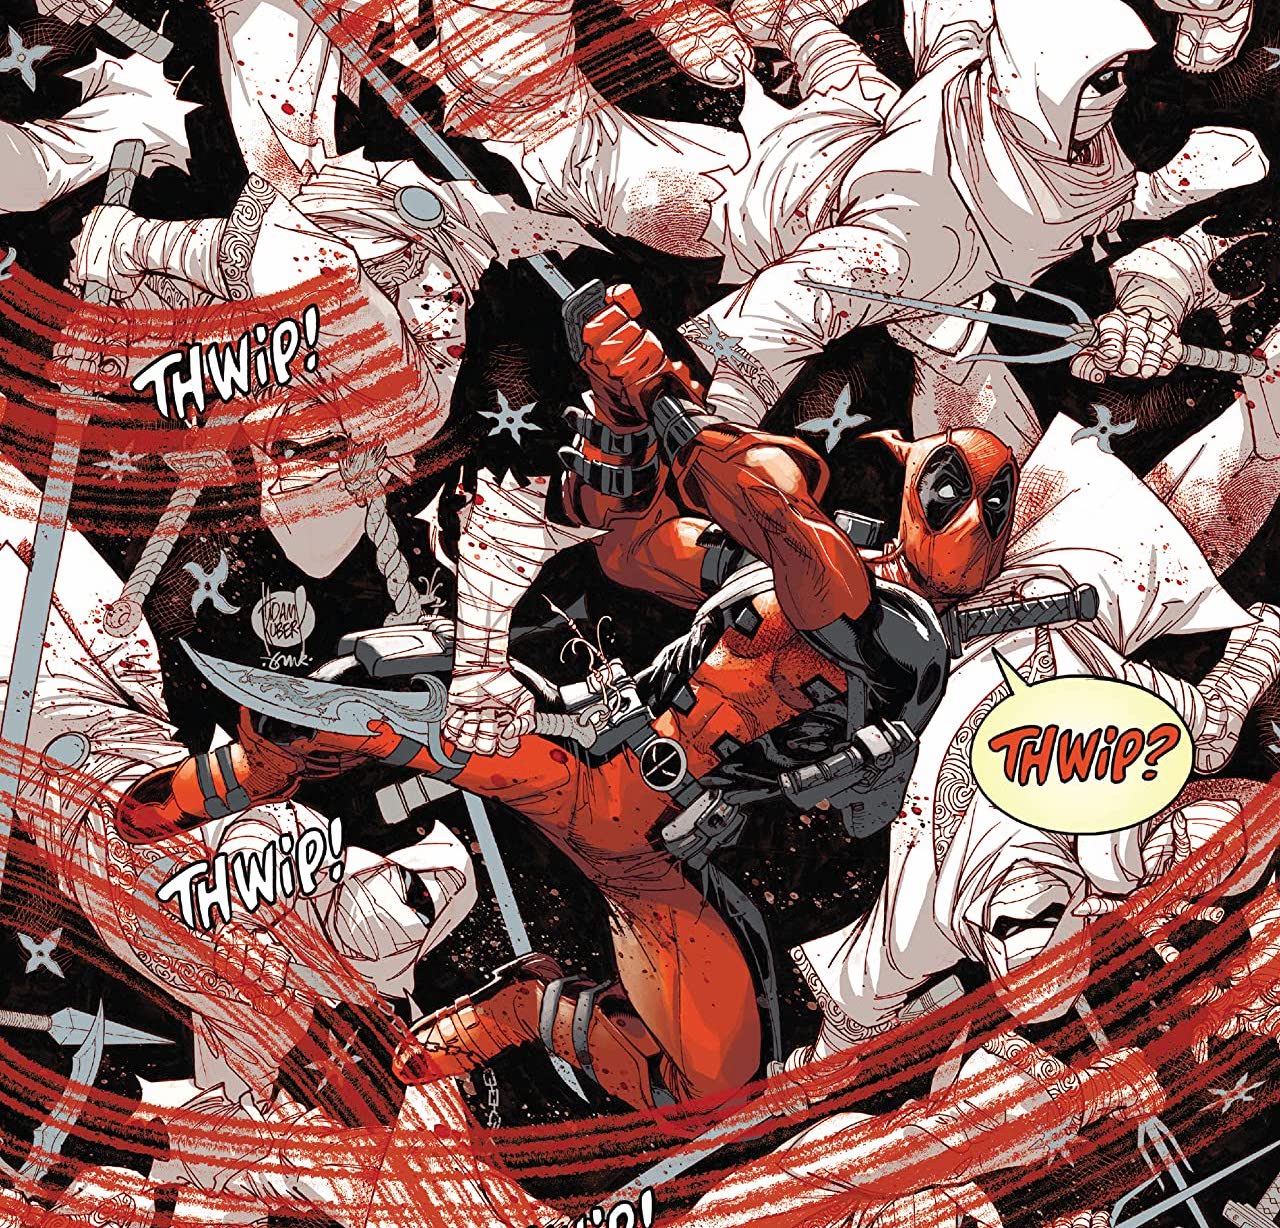 'Deadpool: Black, White & Blood' #1 has plenty of good comedy